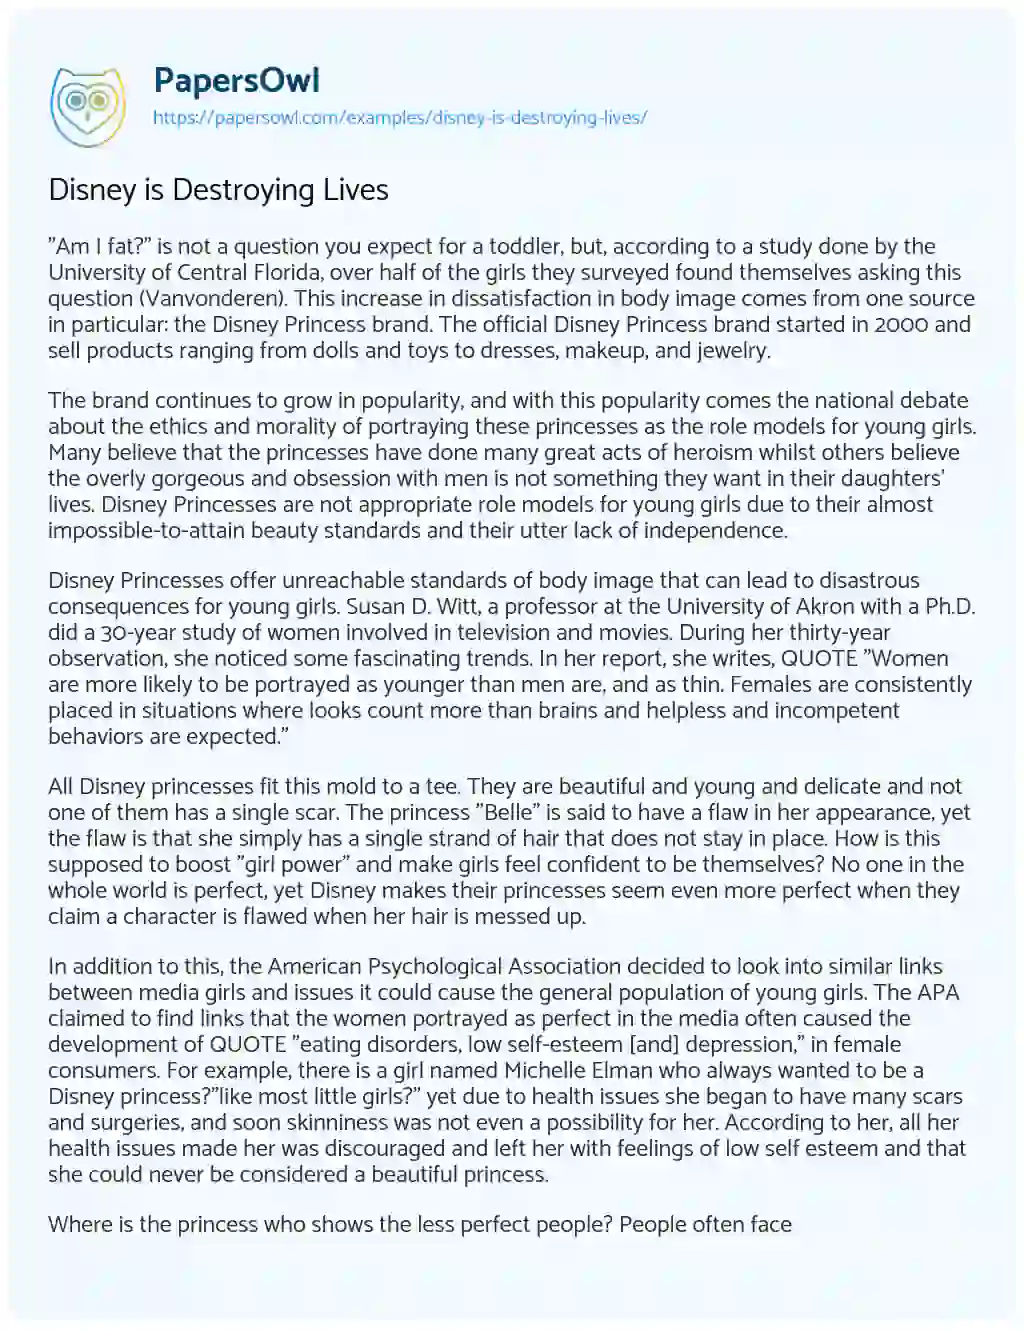 Disney is Destroying Lives essay